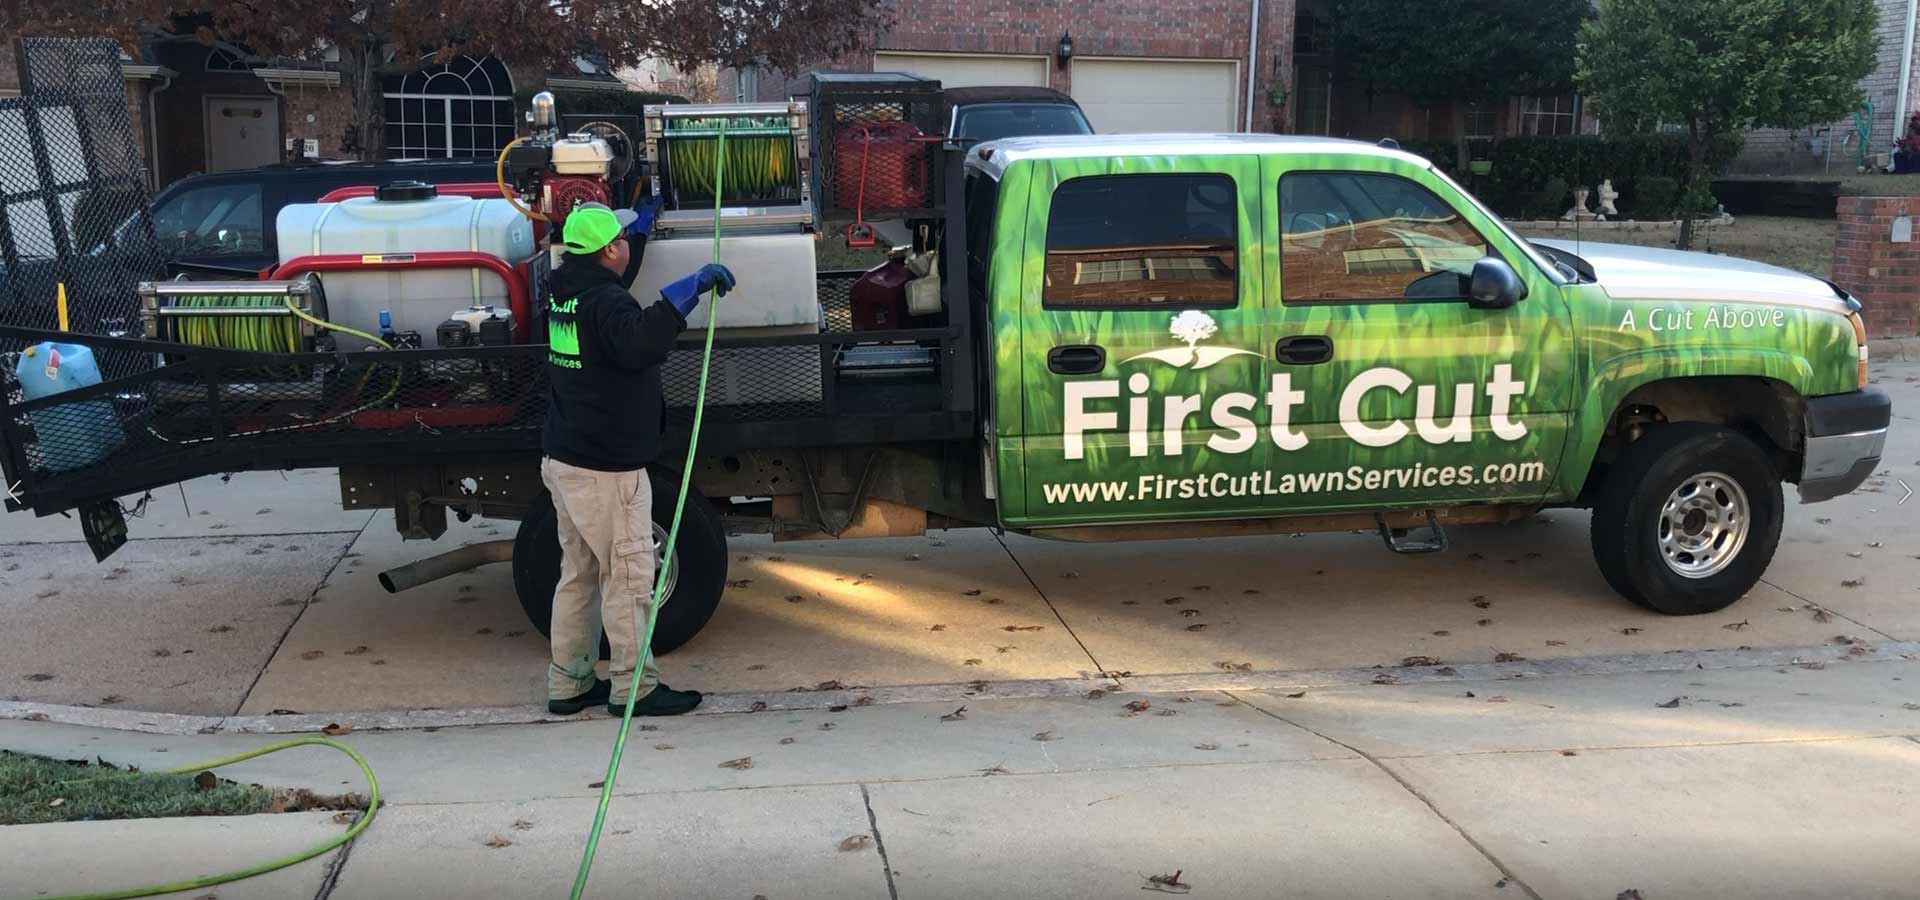 First Cut Lawn Services work truck in Keller, TX.